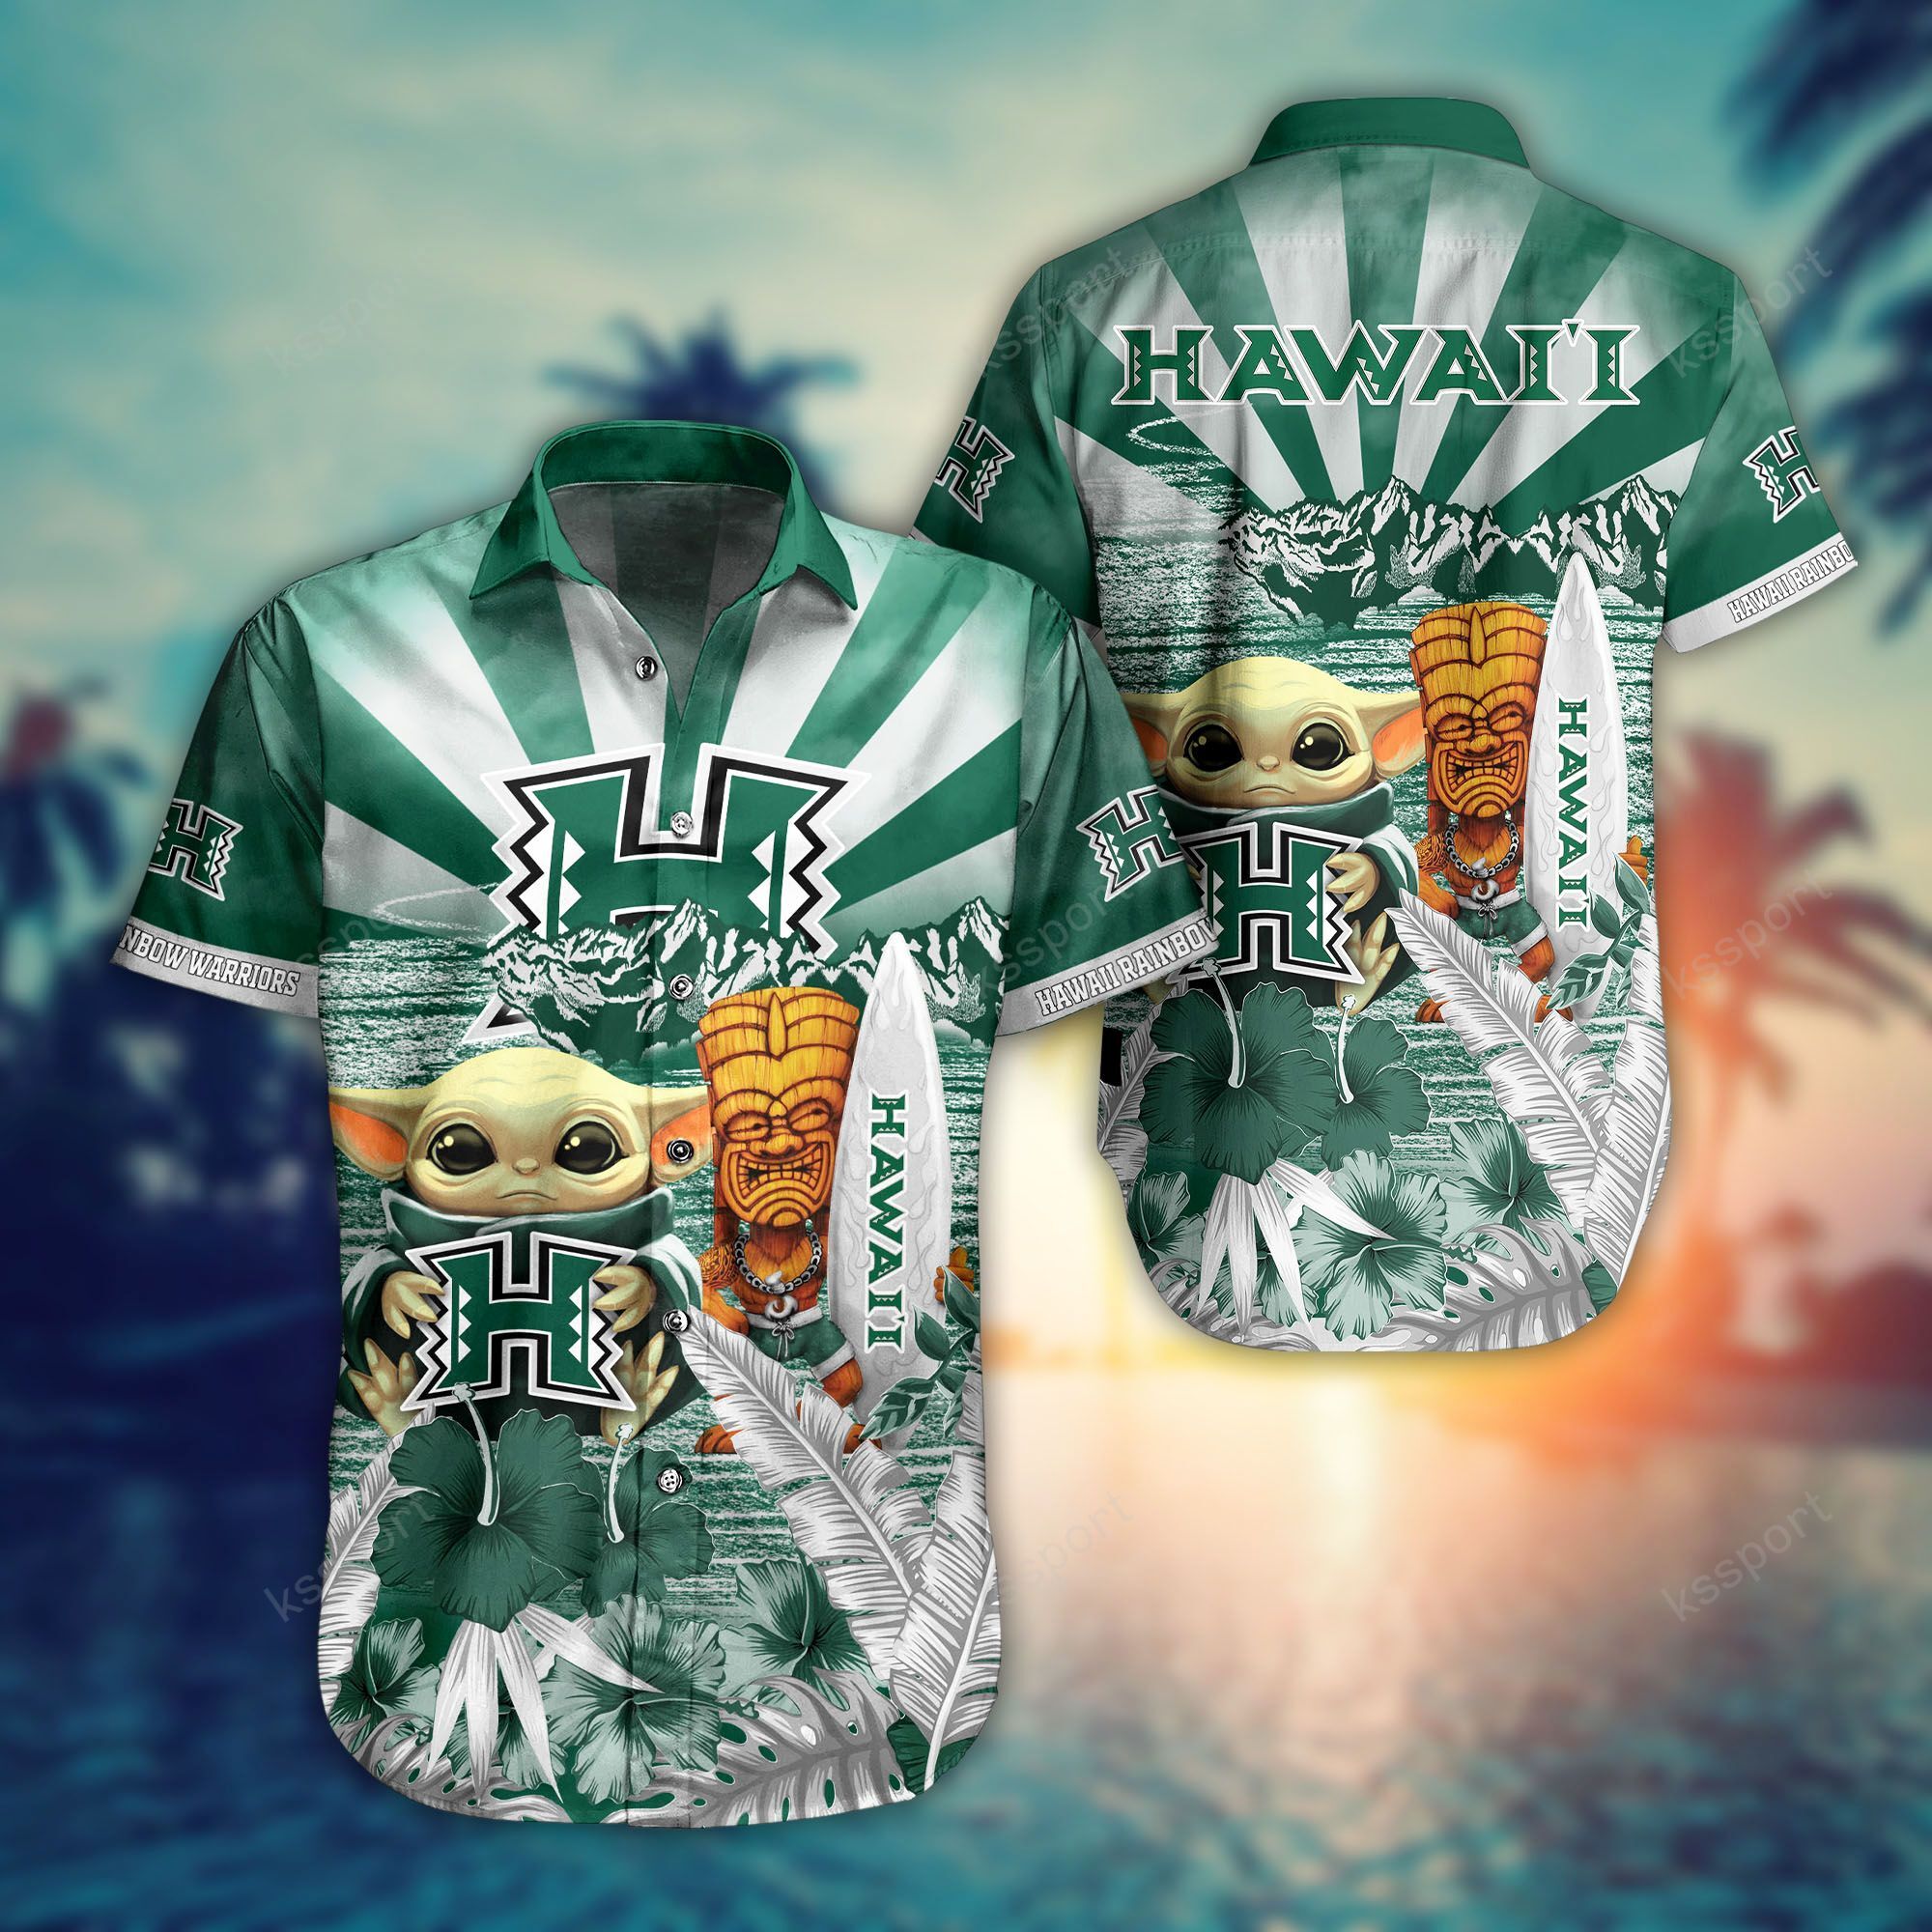 Order Hawaiian shirts to wear on your vacation 40